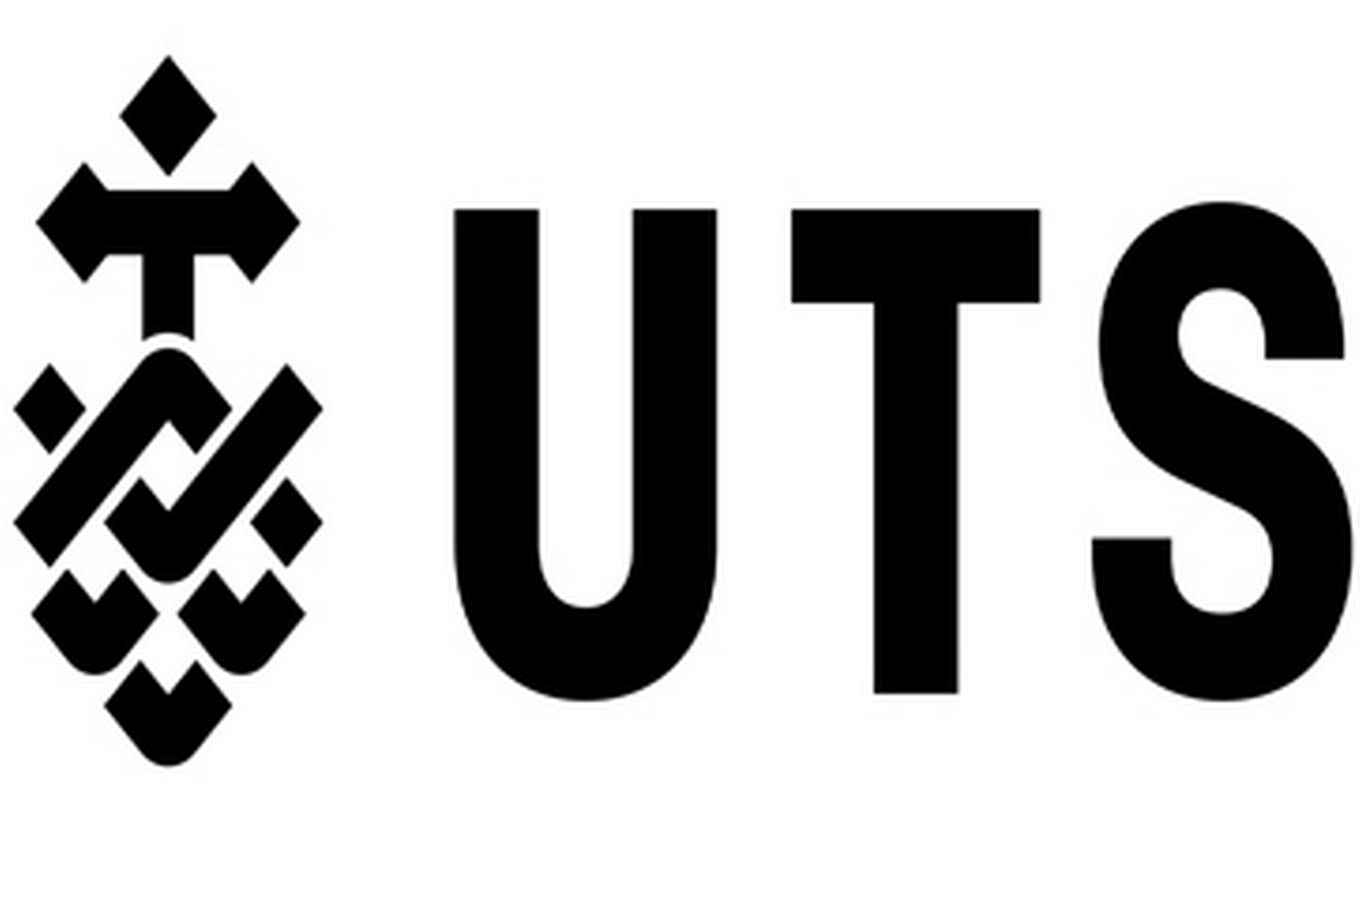 Logo UTS